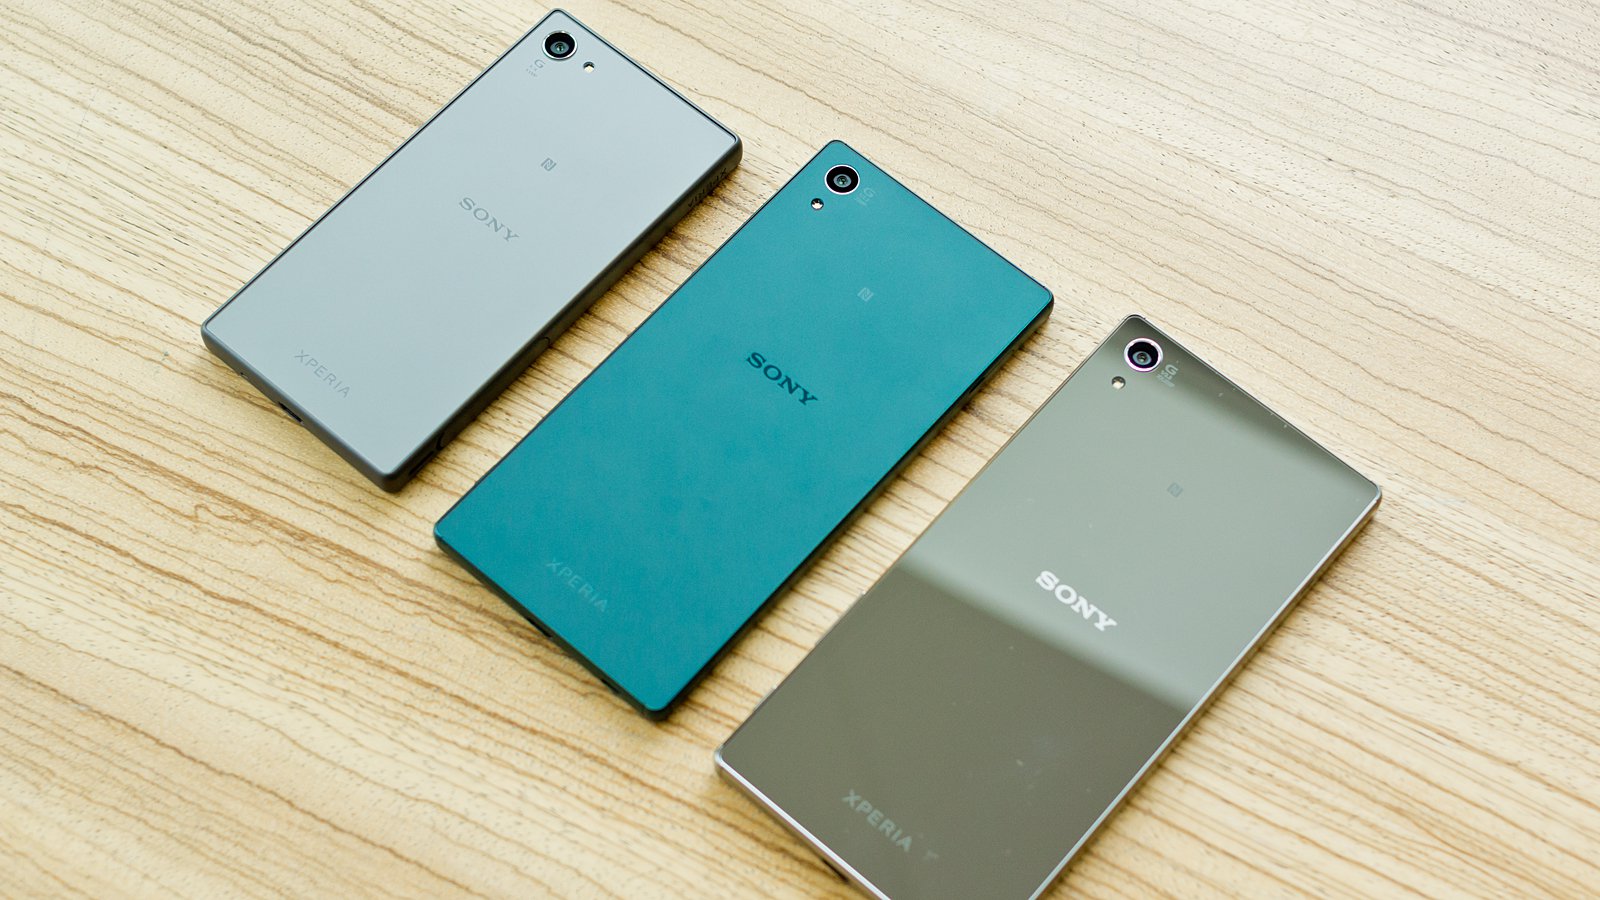 Sony Xperia Z5 Premium and Xperia Z5 Dual land In Smartprix Bytes